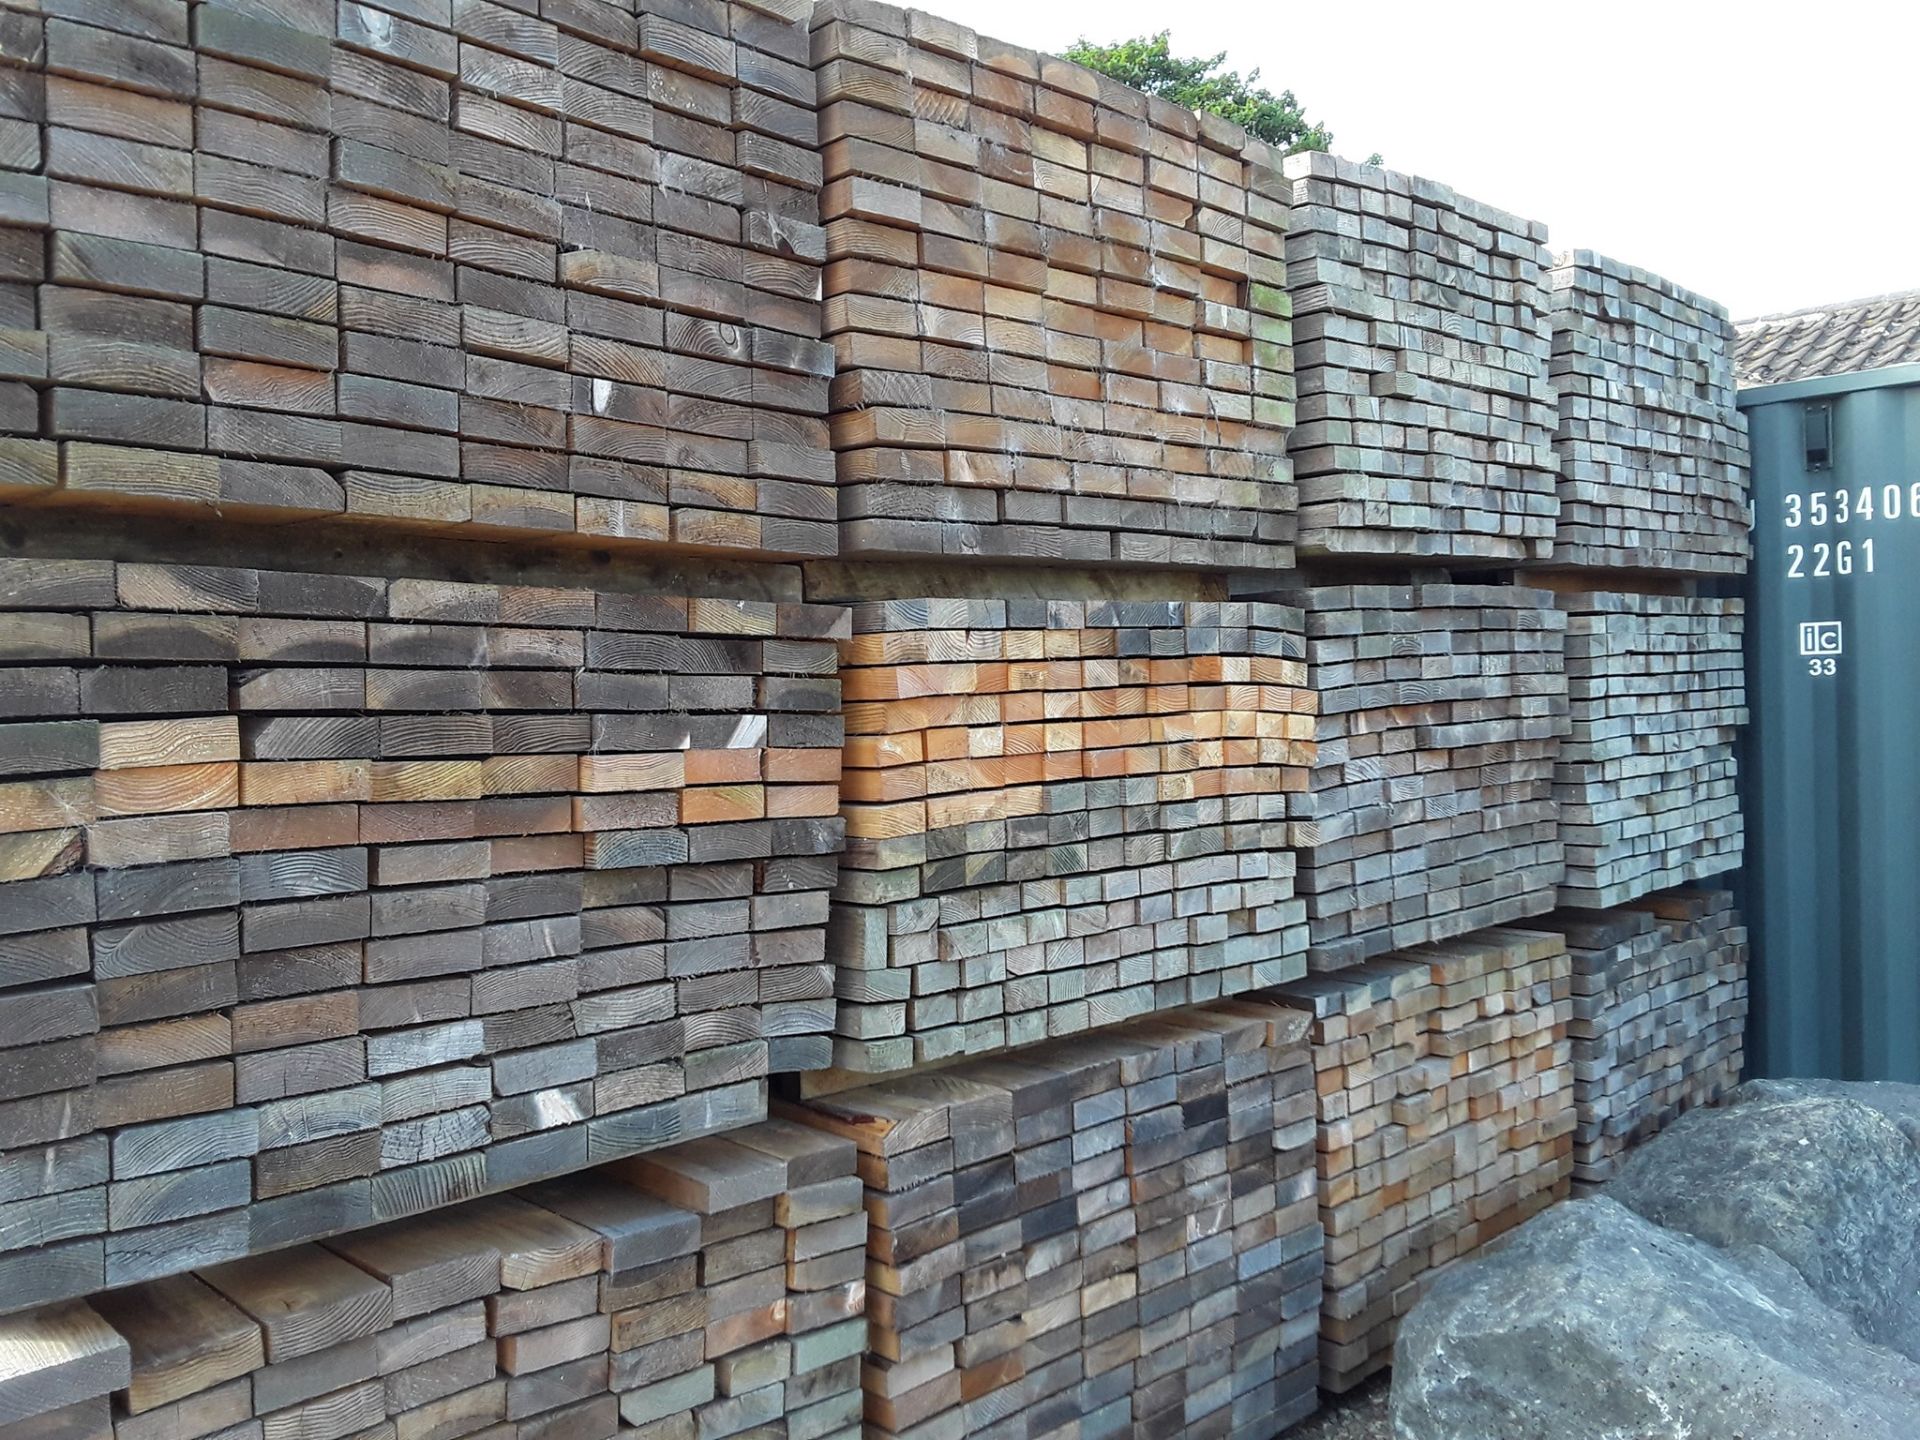 50 x Softwood Sawn Untreated Larch & Douglas Fir Rails / Fence Rails - Image 2 of 3